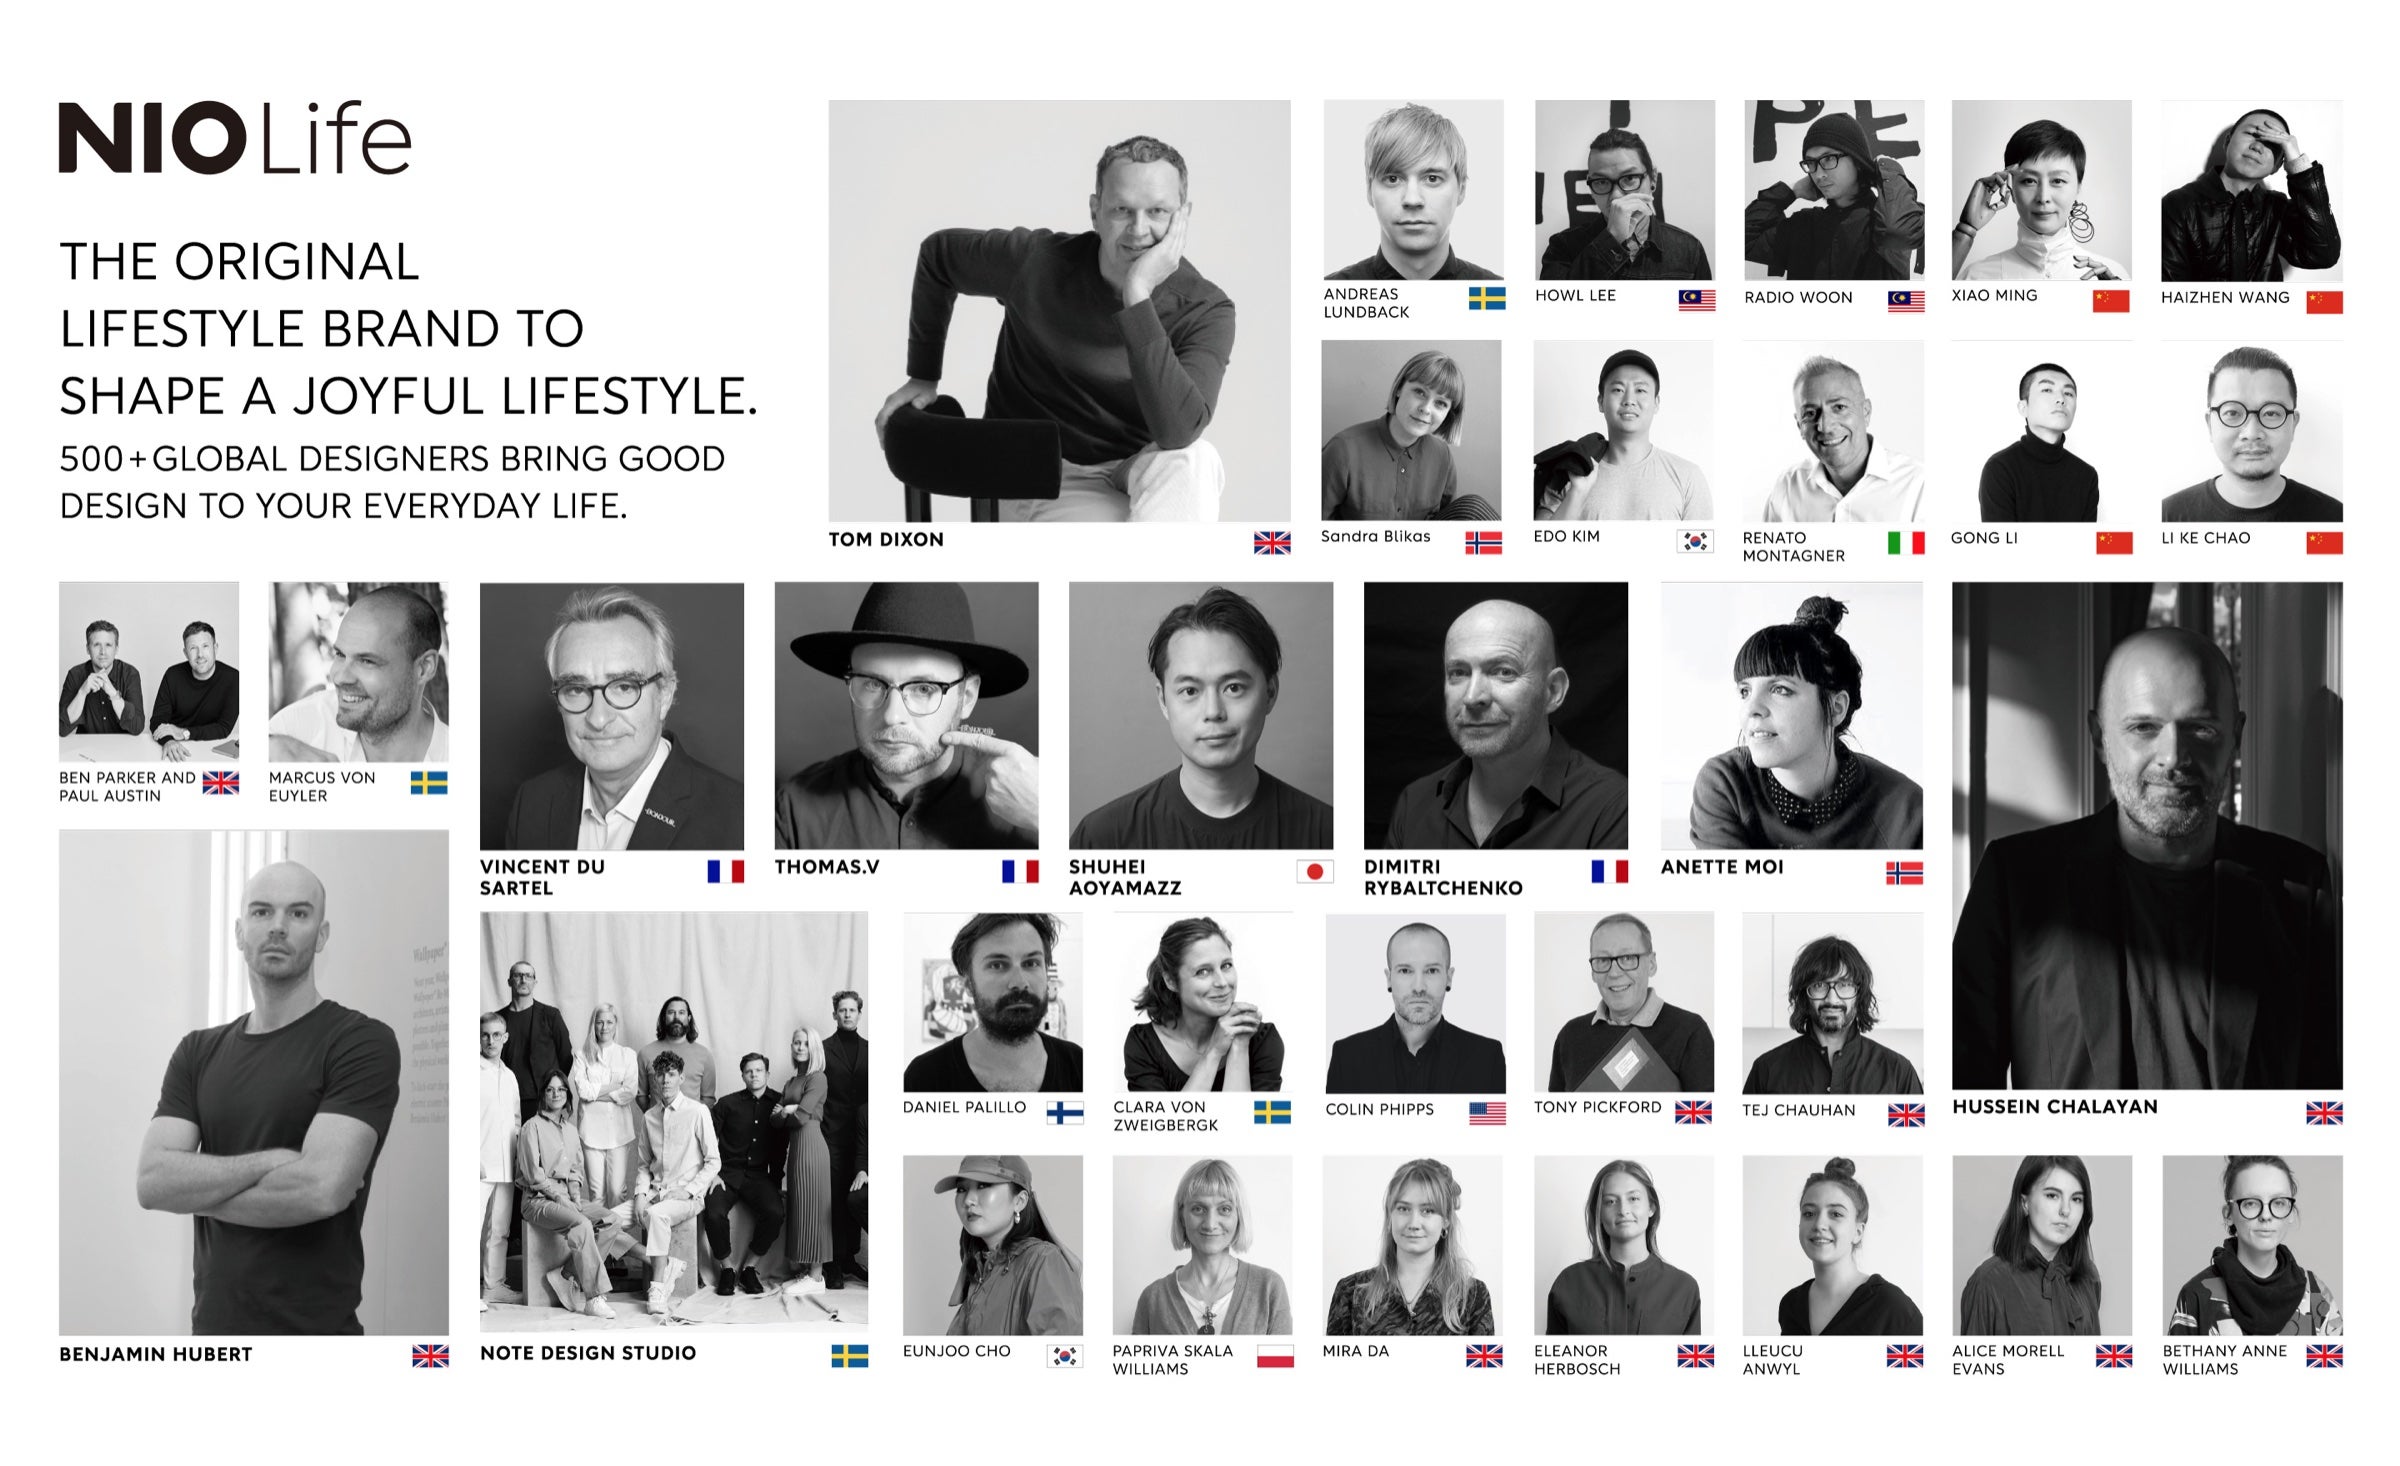 600+ designers across the world